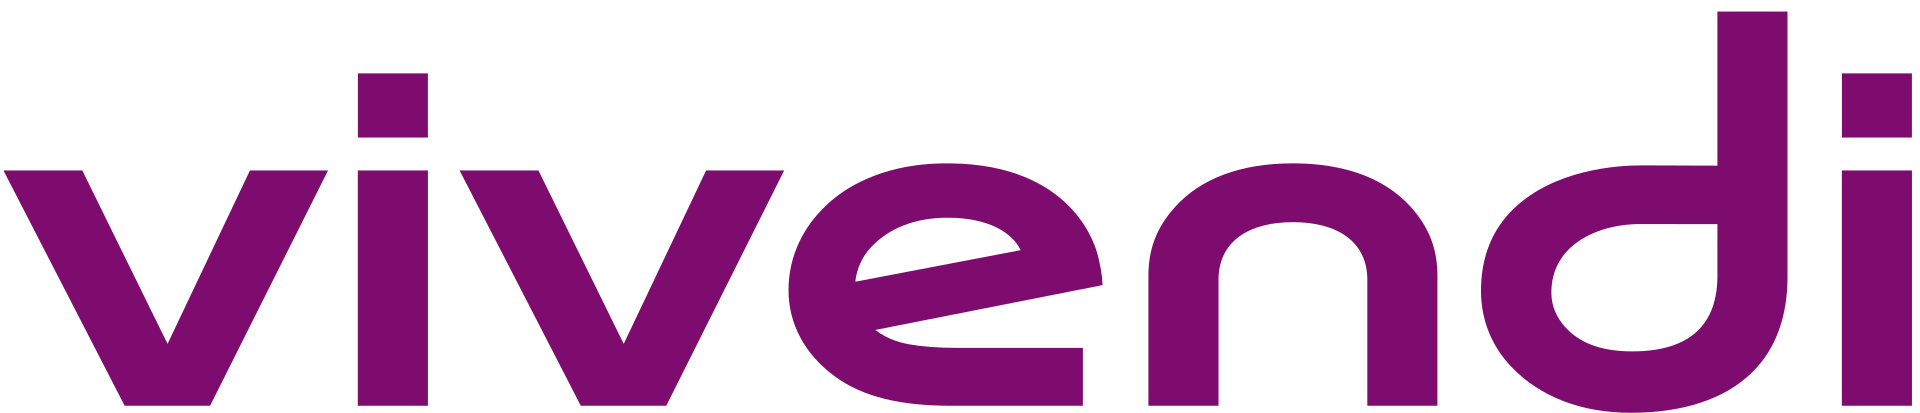 Vivendi Logo - Officiel - 1